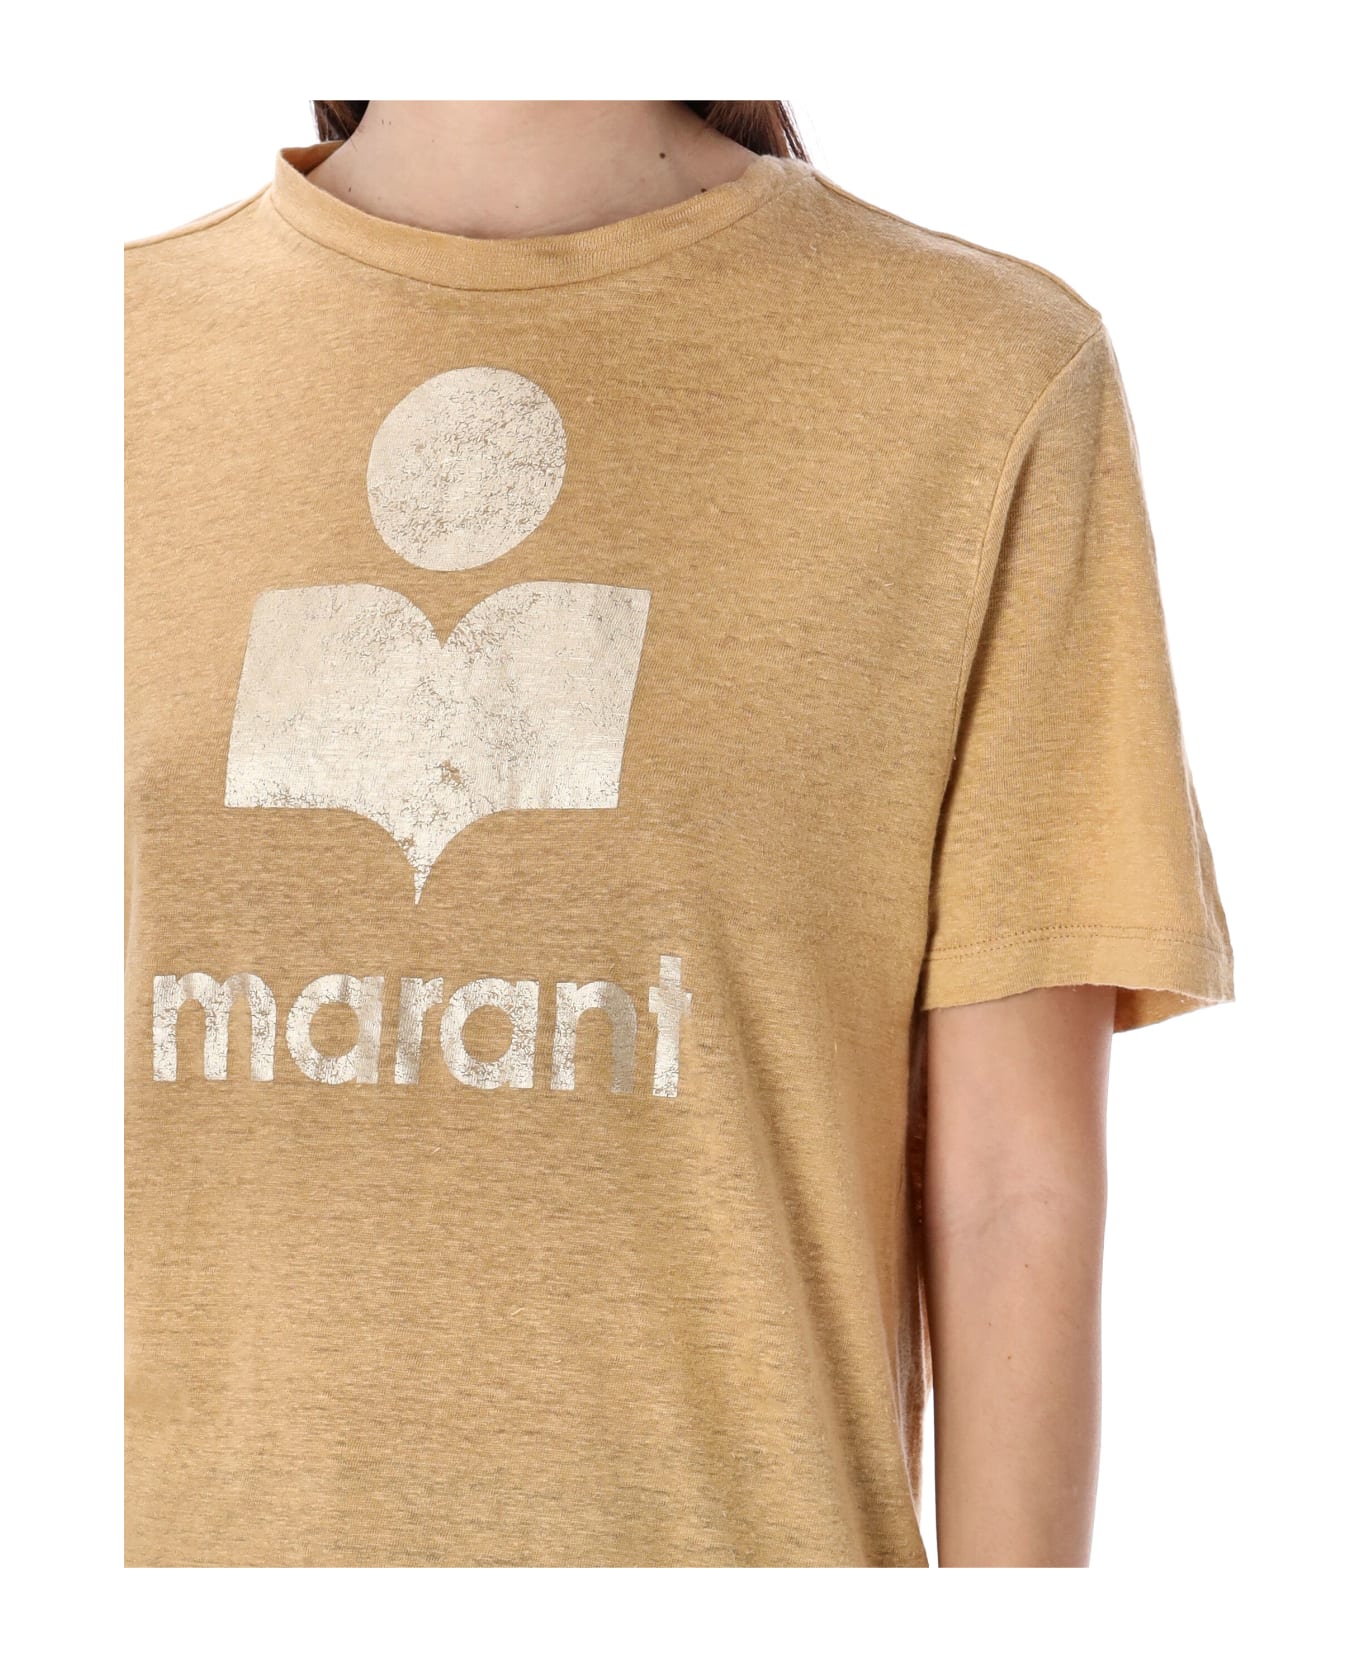 Marant Étoile Zewel T-shirt - SAHARA/LIGHT GOLD